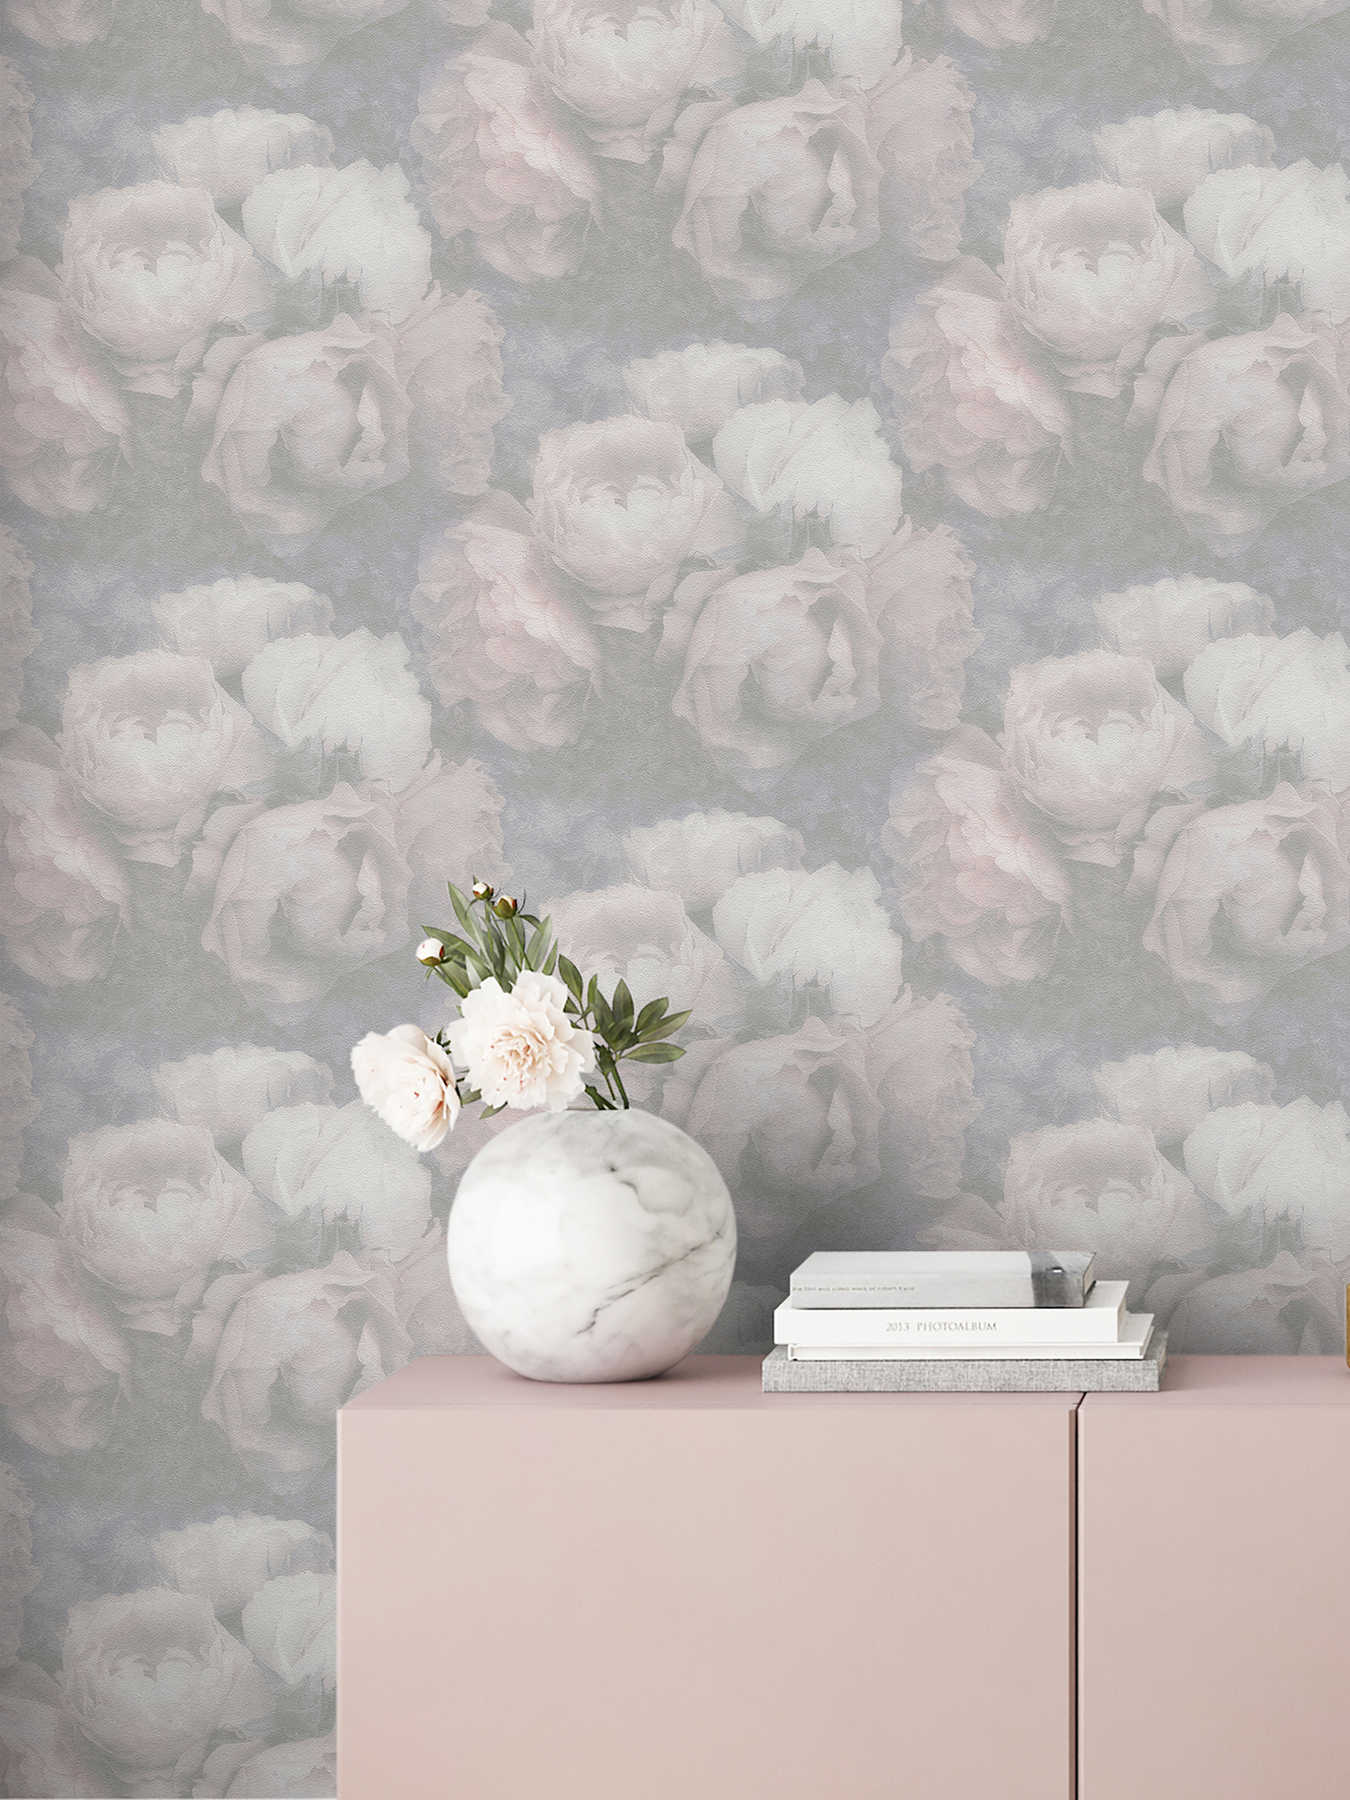             Pastel wallpaper with peonies - pink, grey, white
        